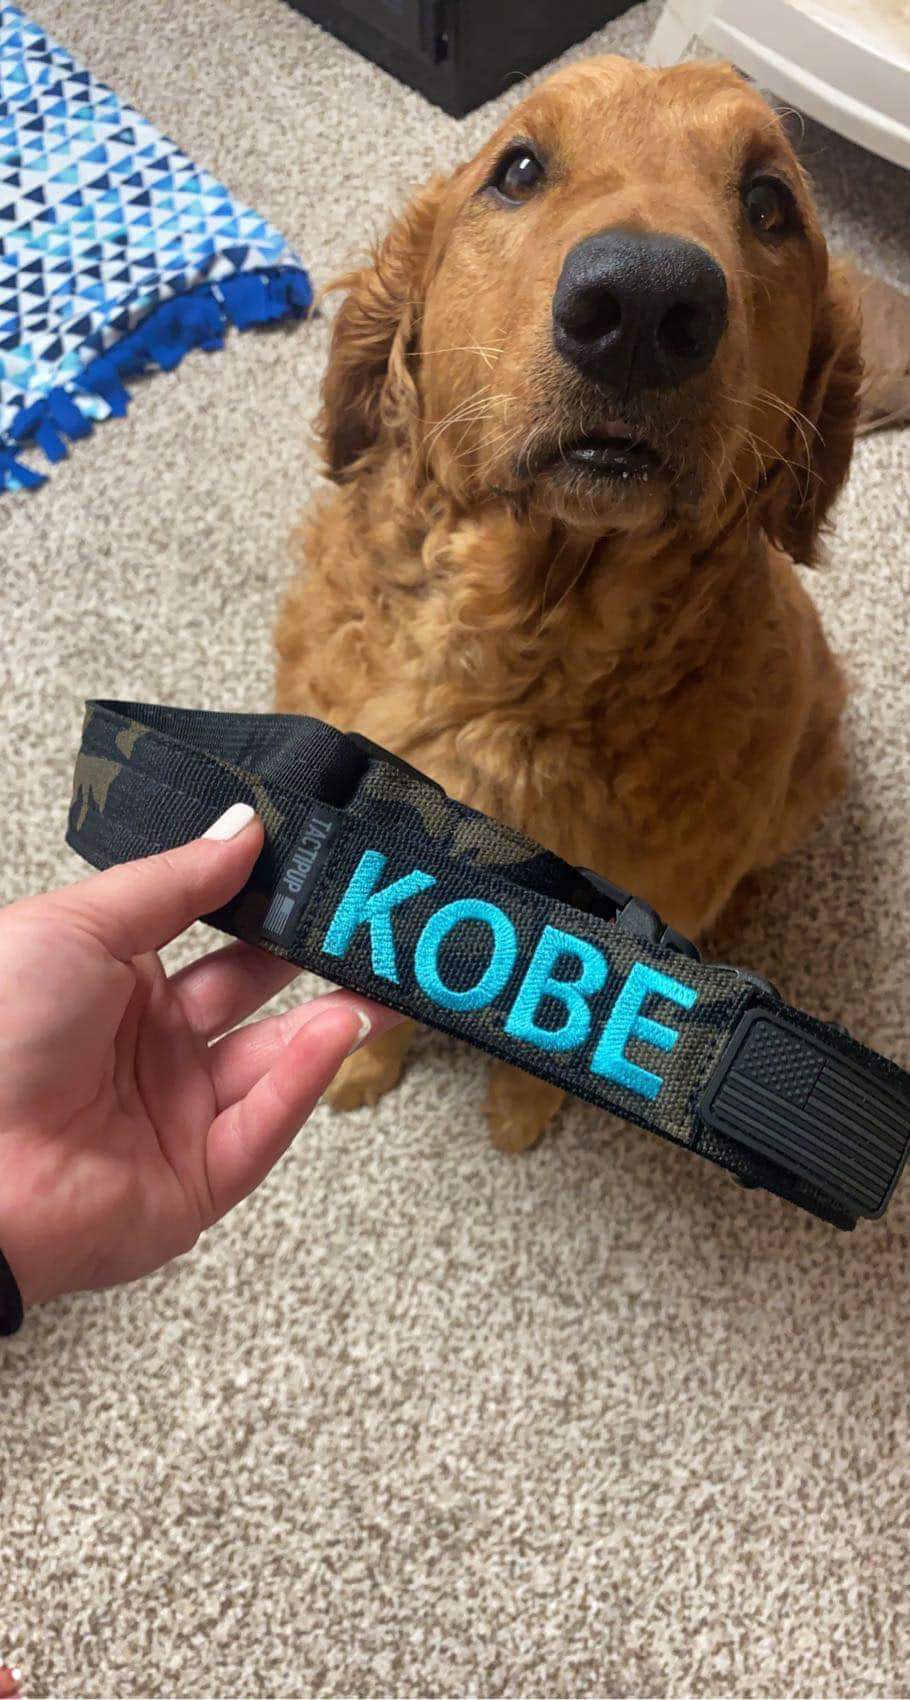 Image of Kobe, Lost Dog